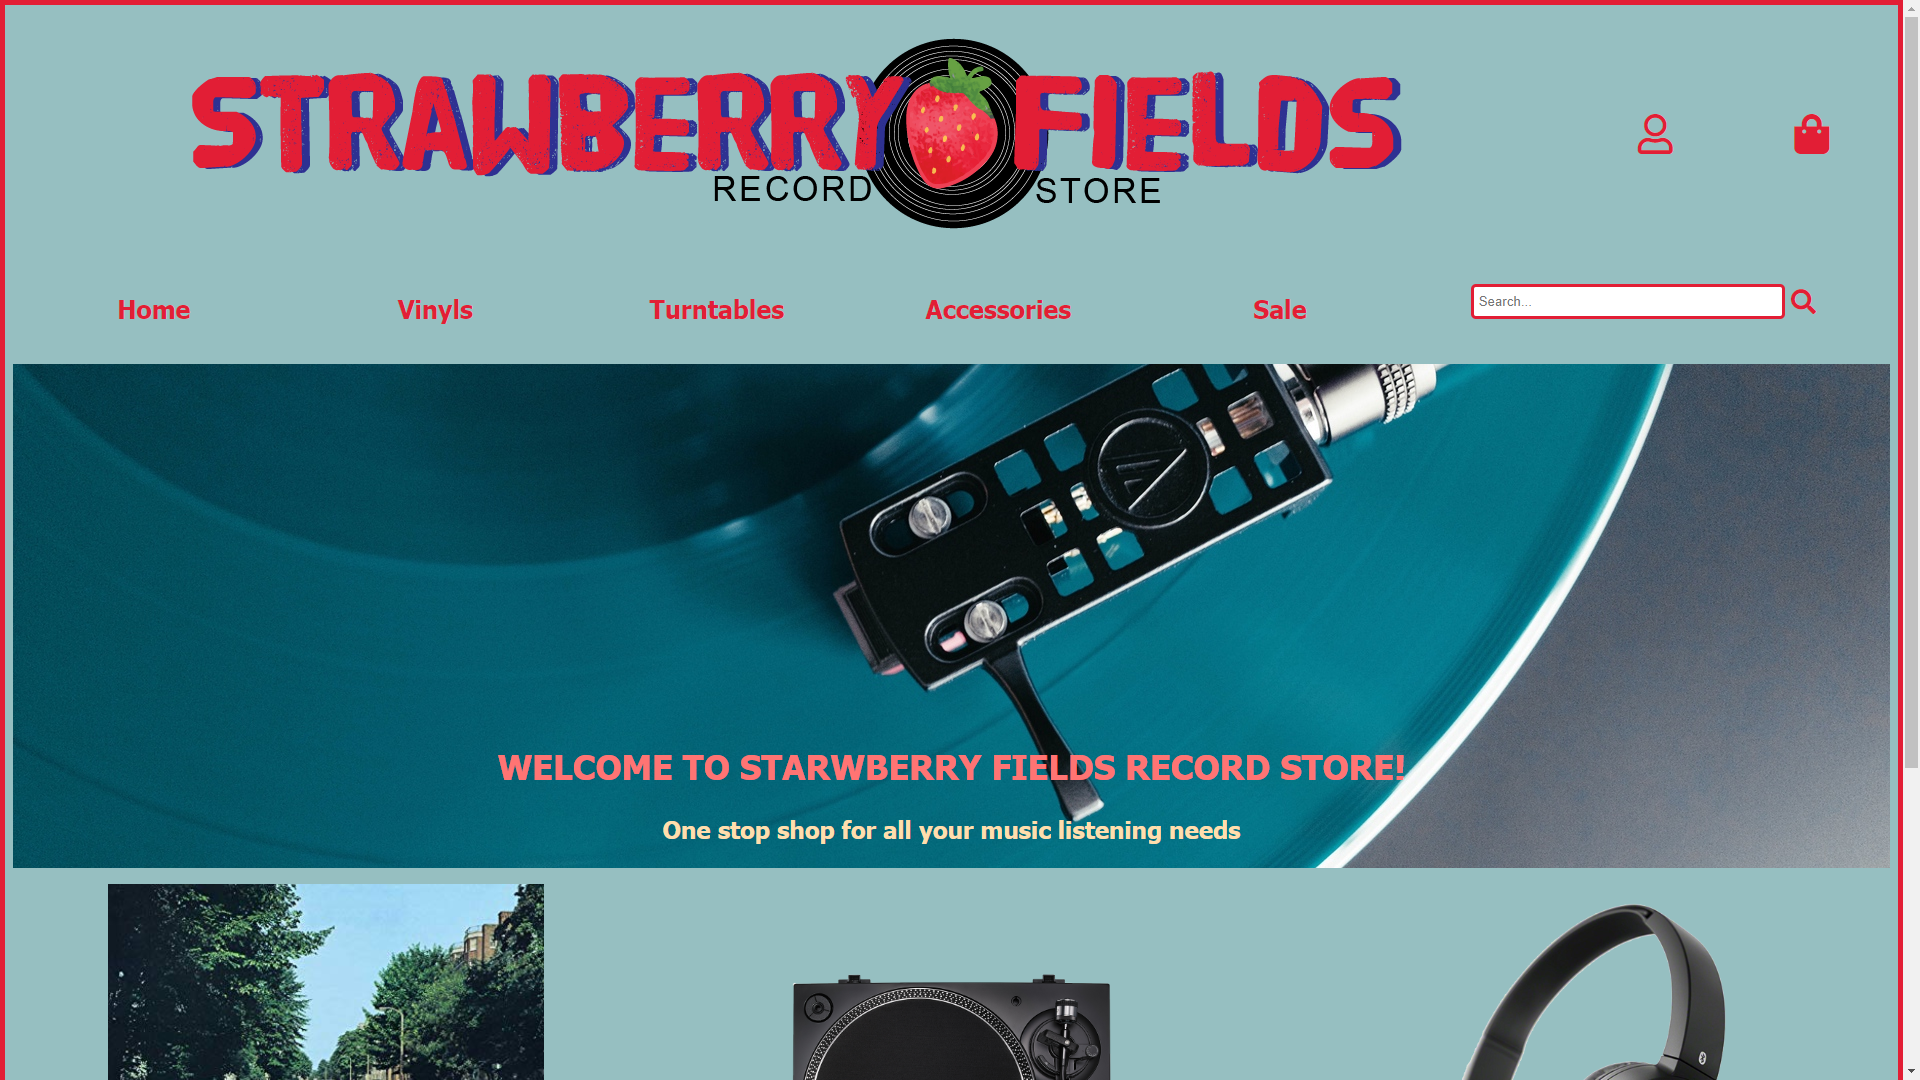 Strawberry Fields Record Store